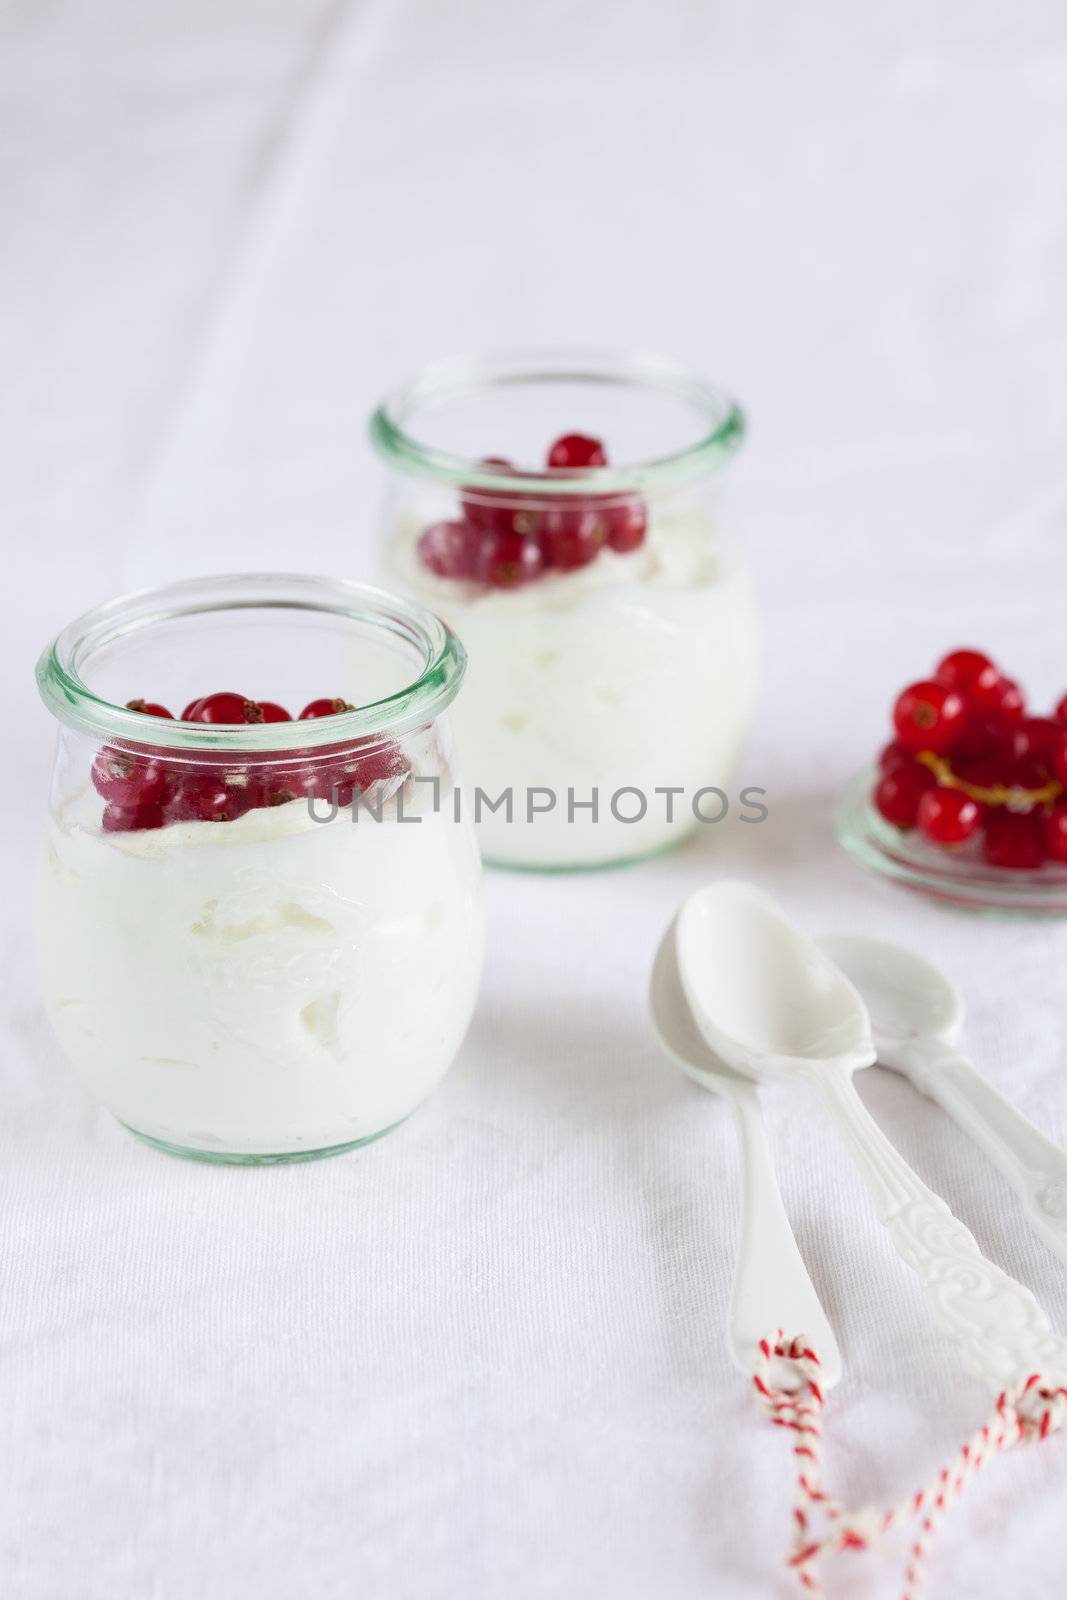 Yogurt with berries by Fotosmurf